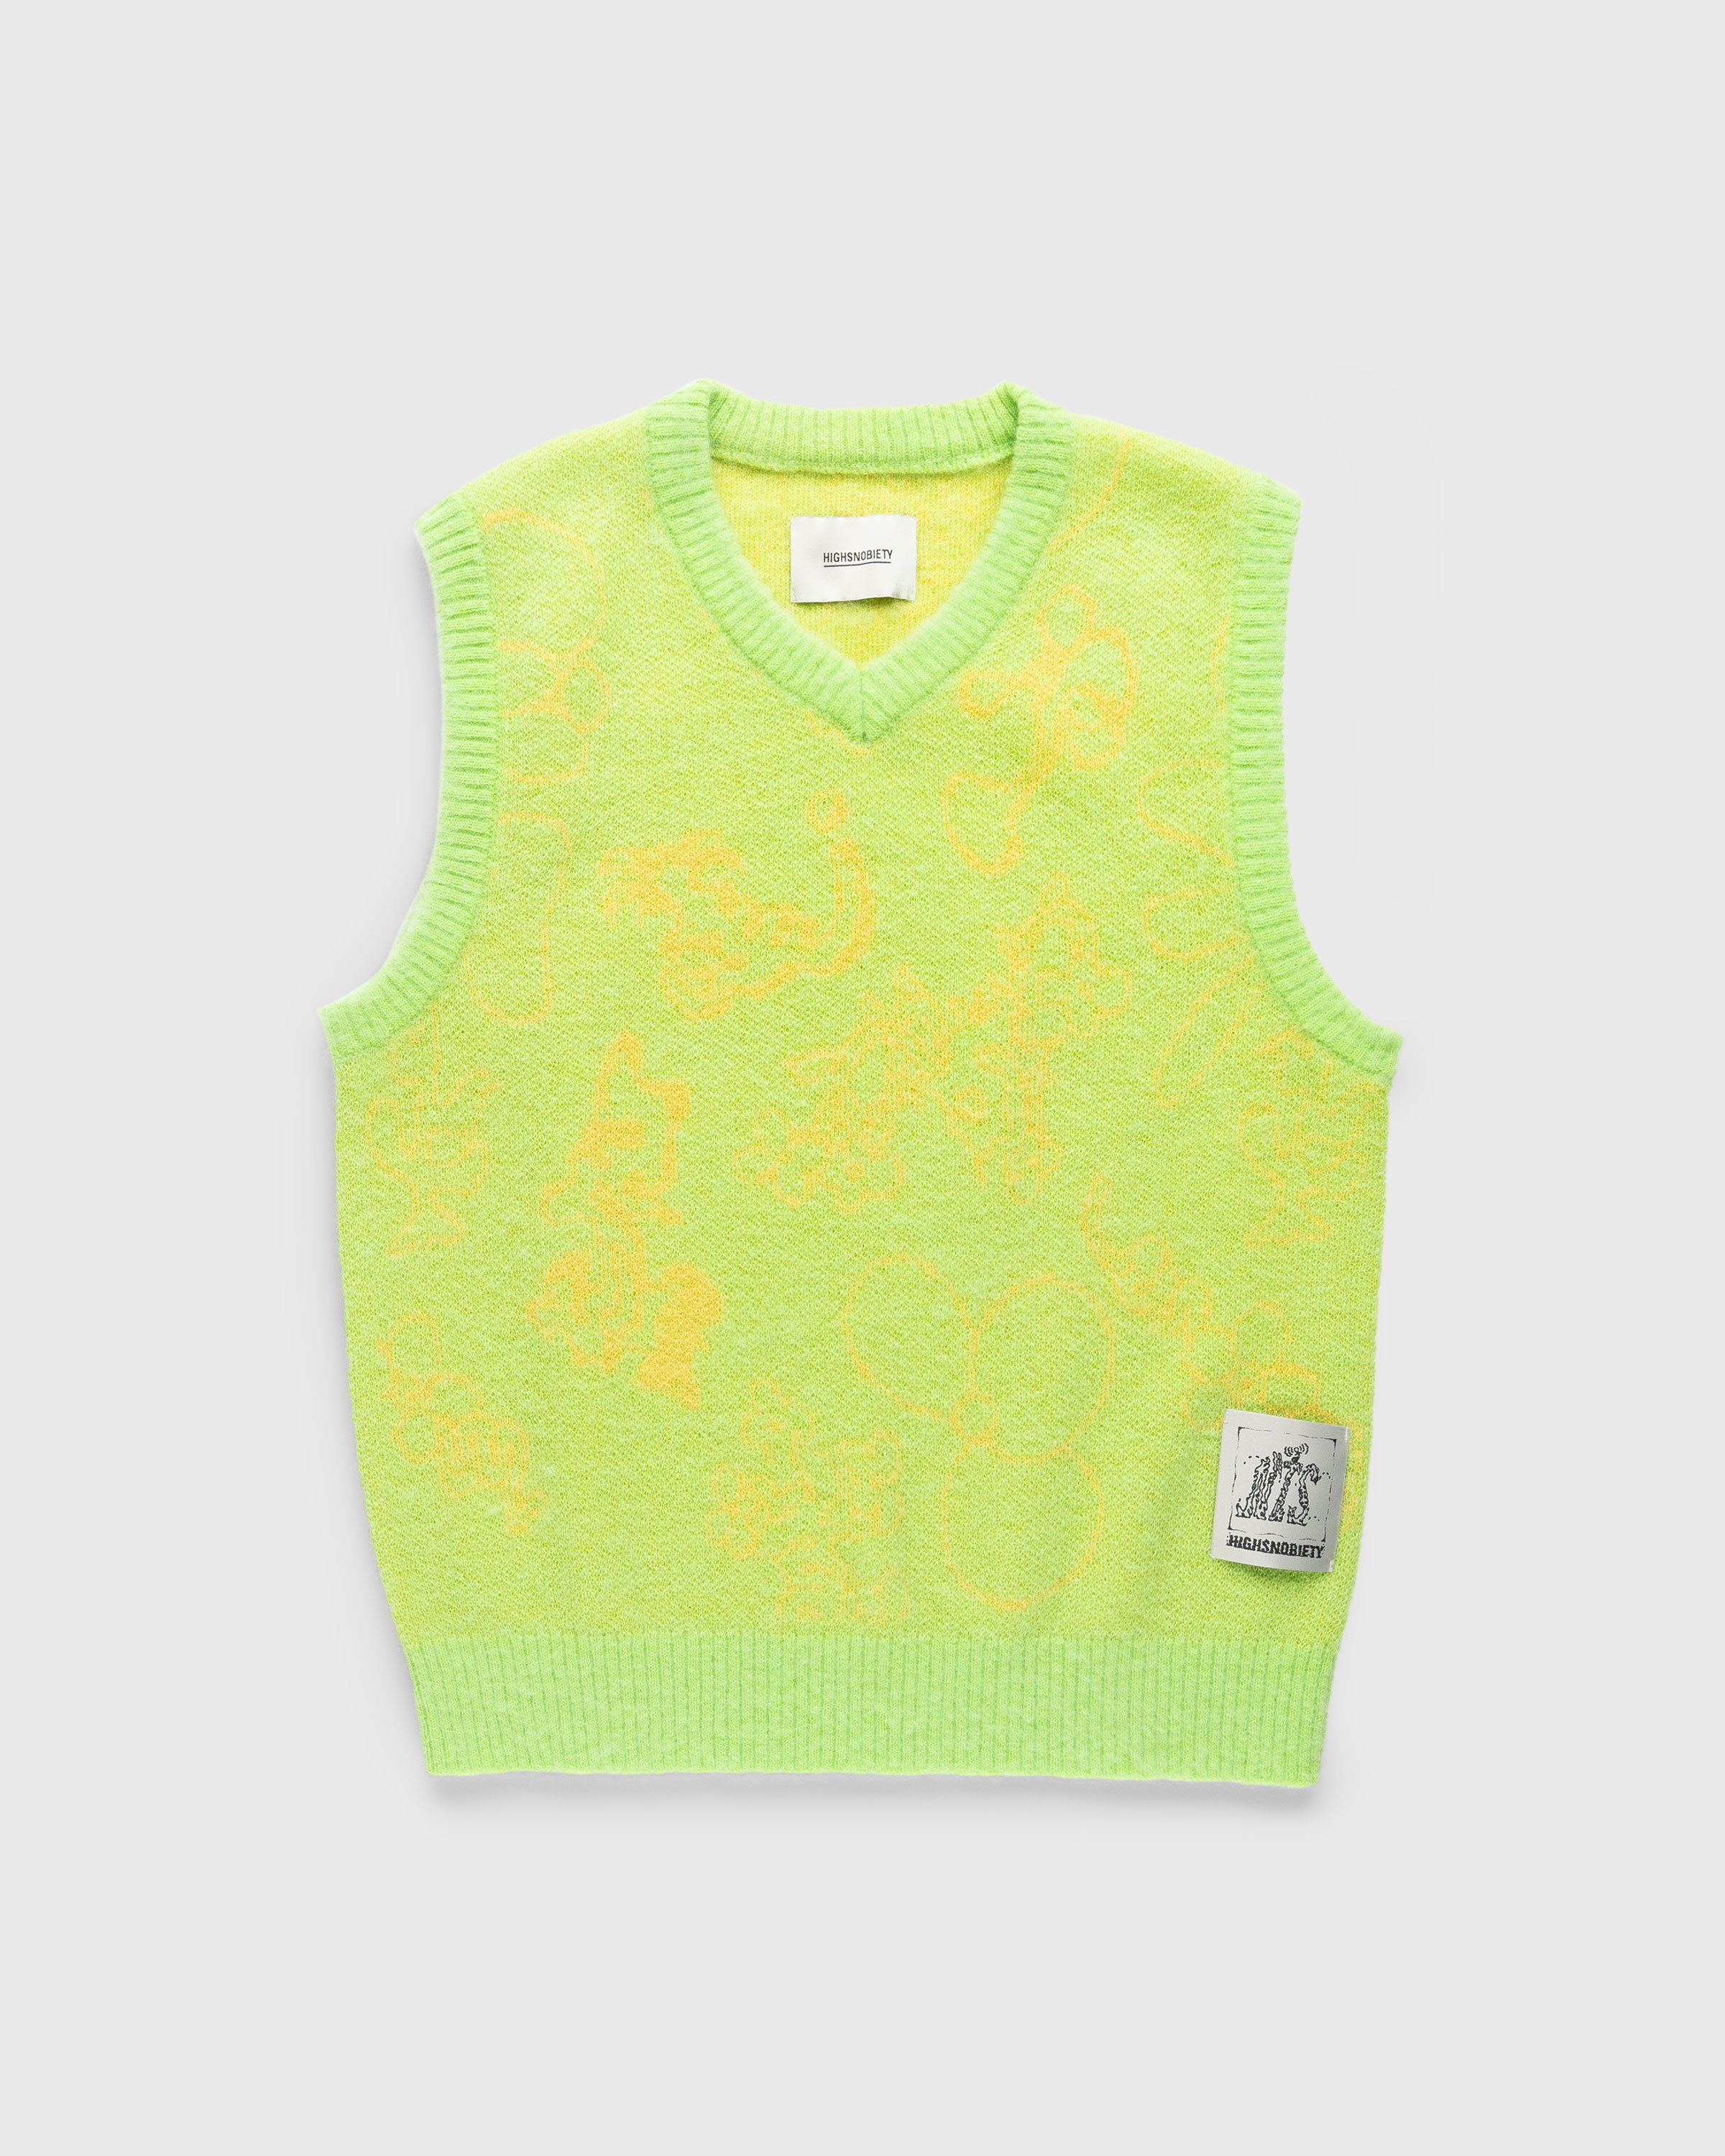 NTS x Highsnobiety - Alpaca Fuzzy Sweater Vest Green - Clothing - Green - Image 1